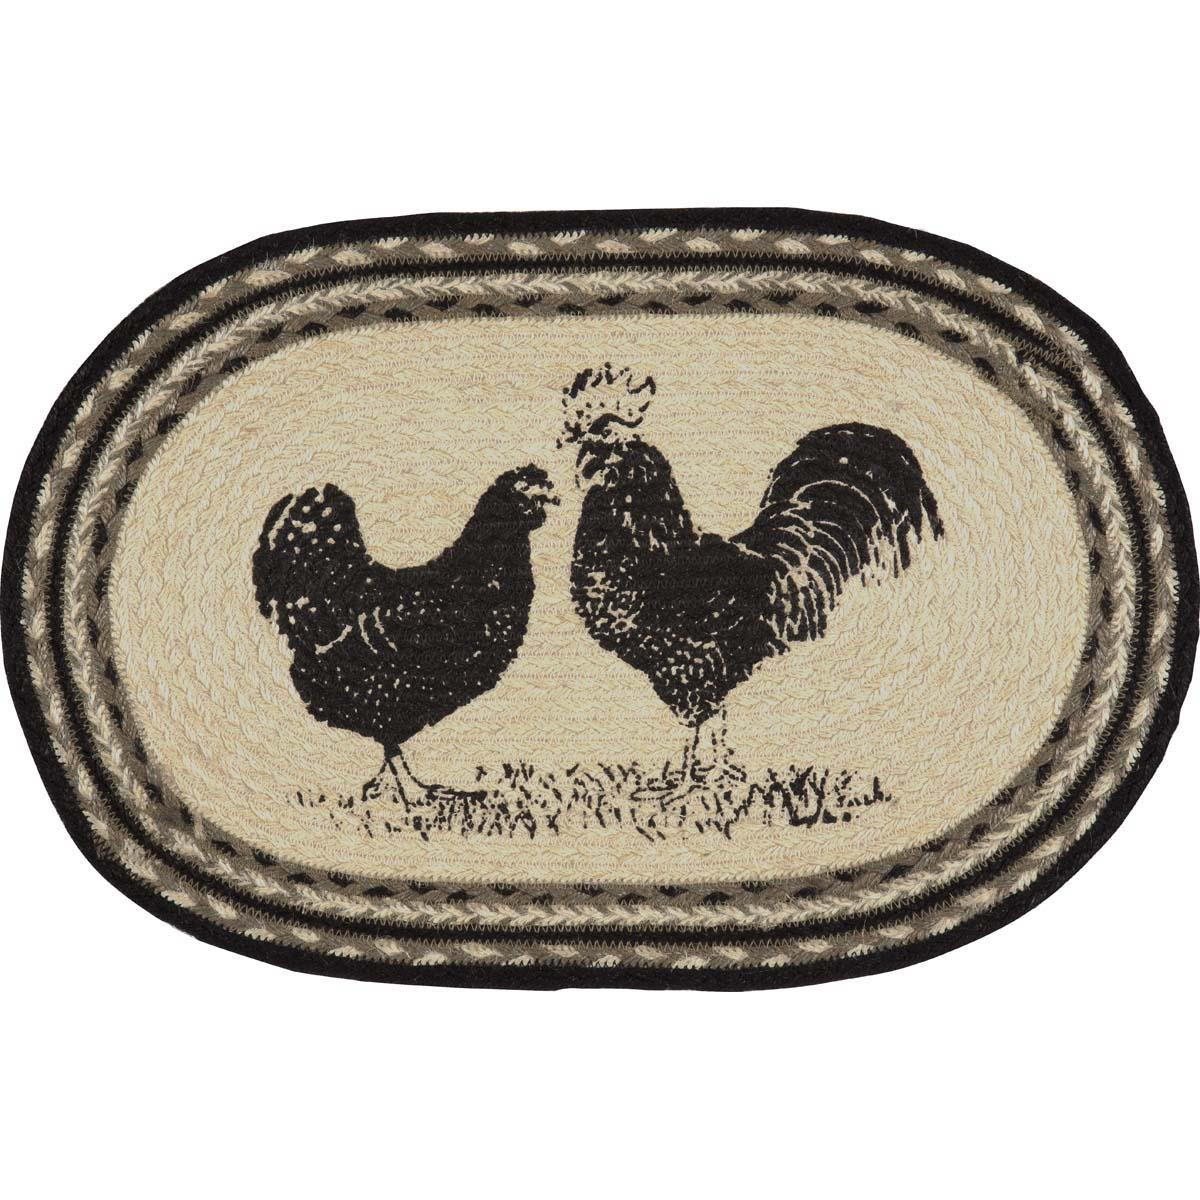 Sawyer Mill Poultry Jute Placemat Set - 840528160585